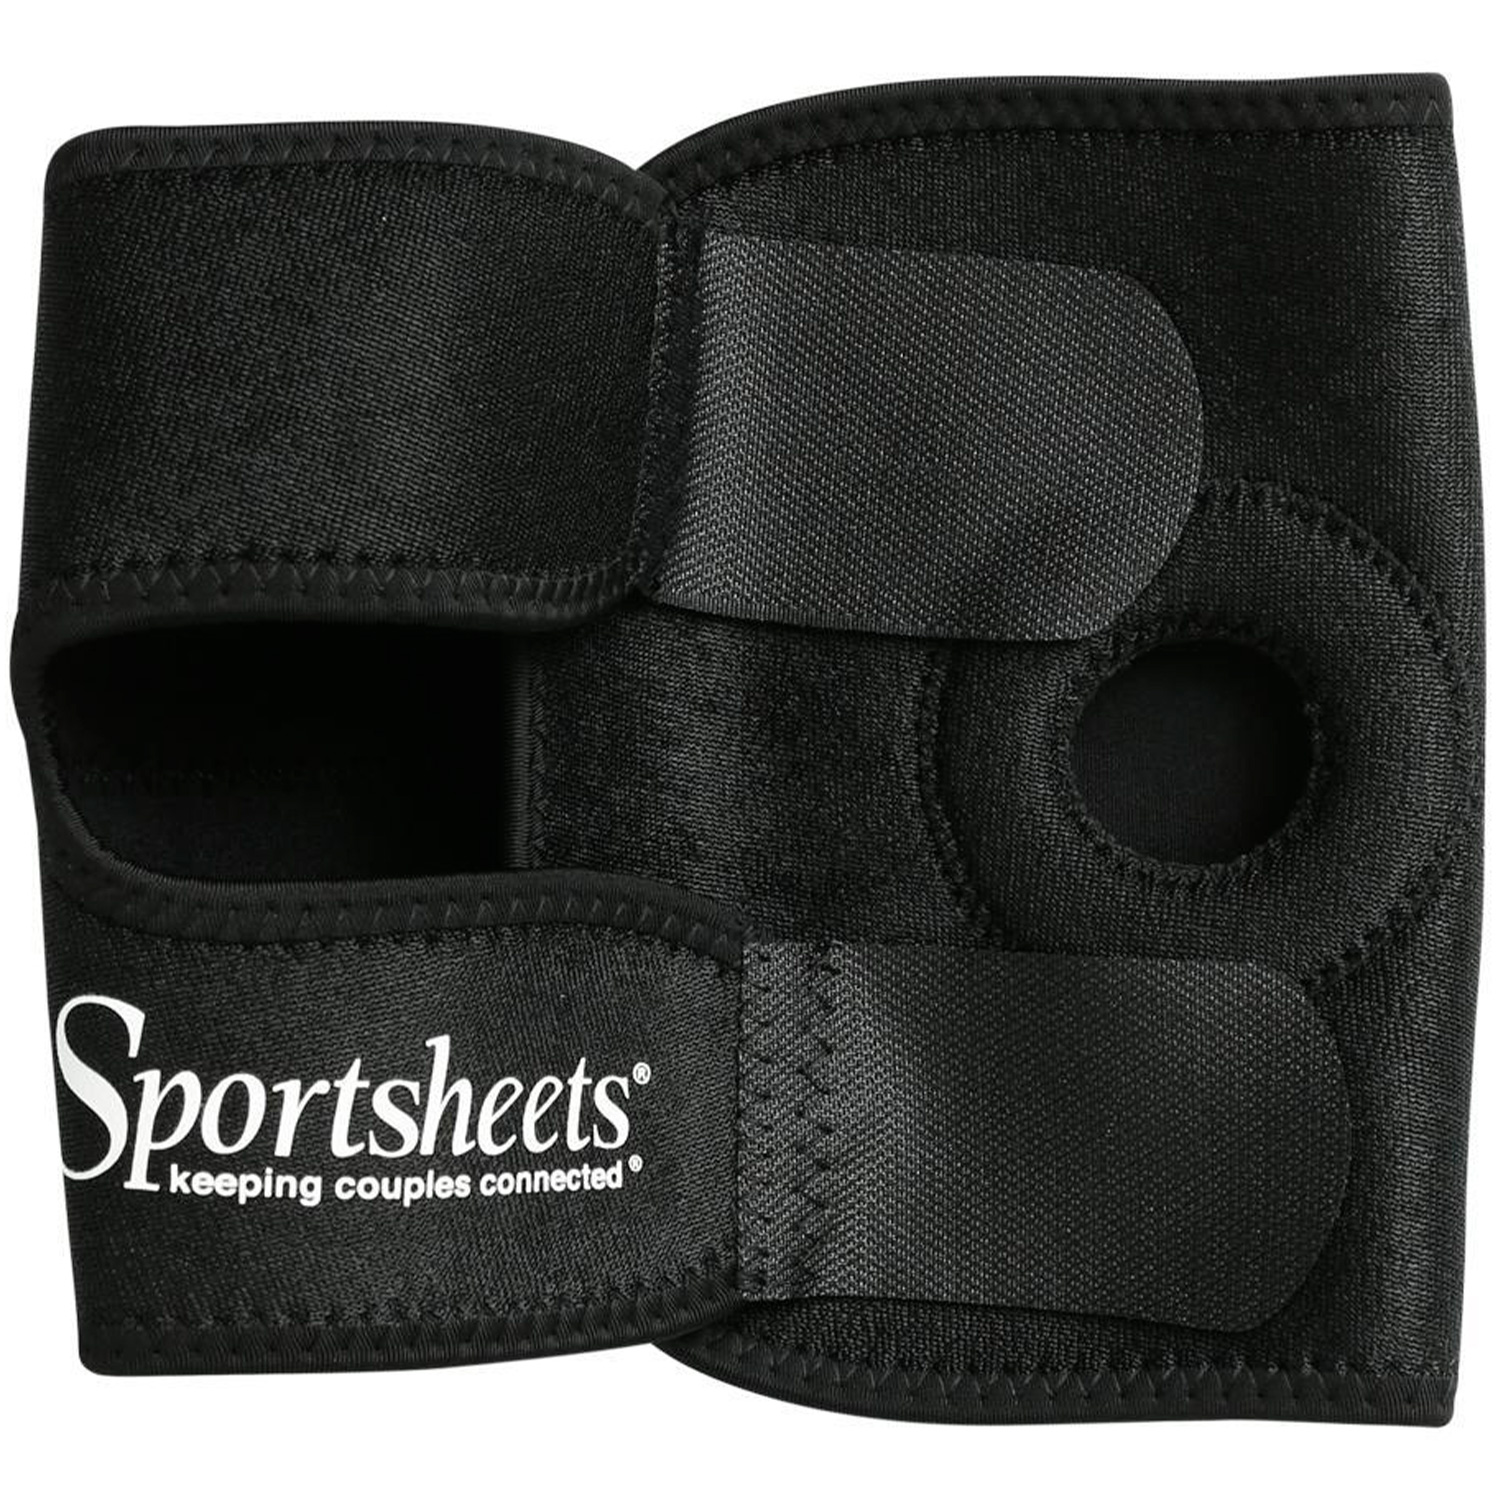 Sportsheets Strap-on Harness til Lår      - Sort thumbnail